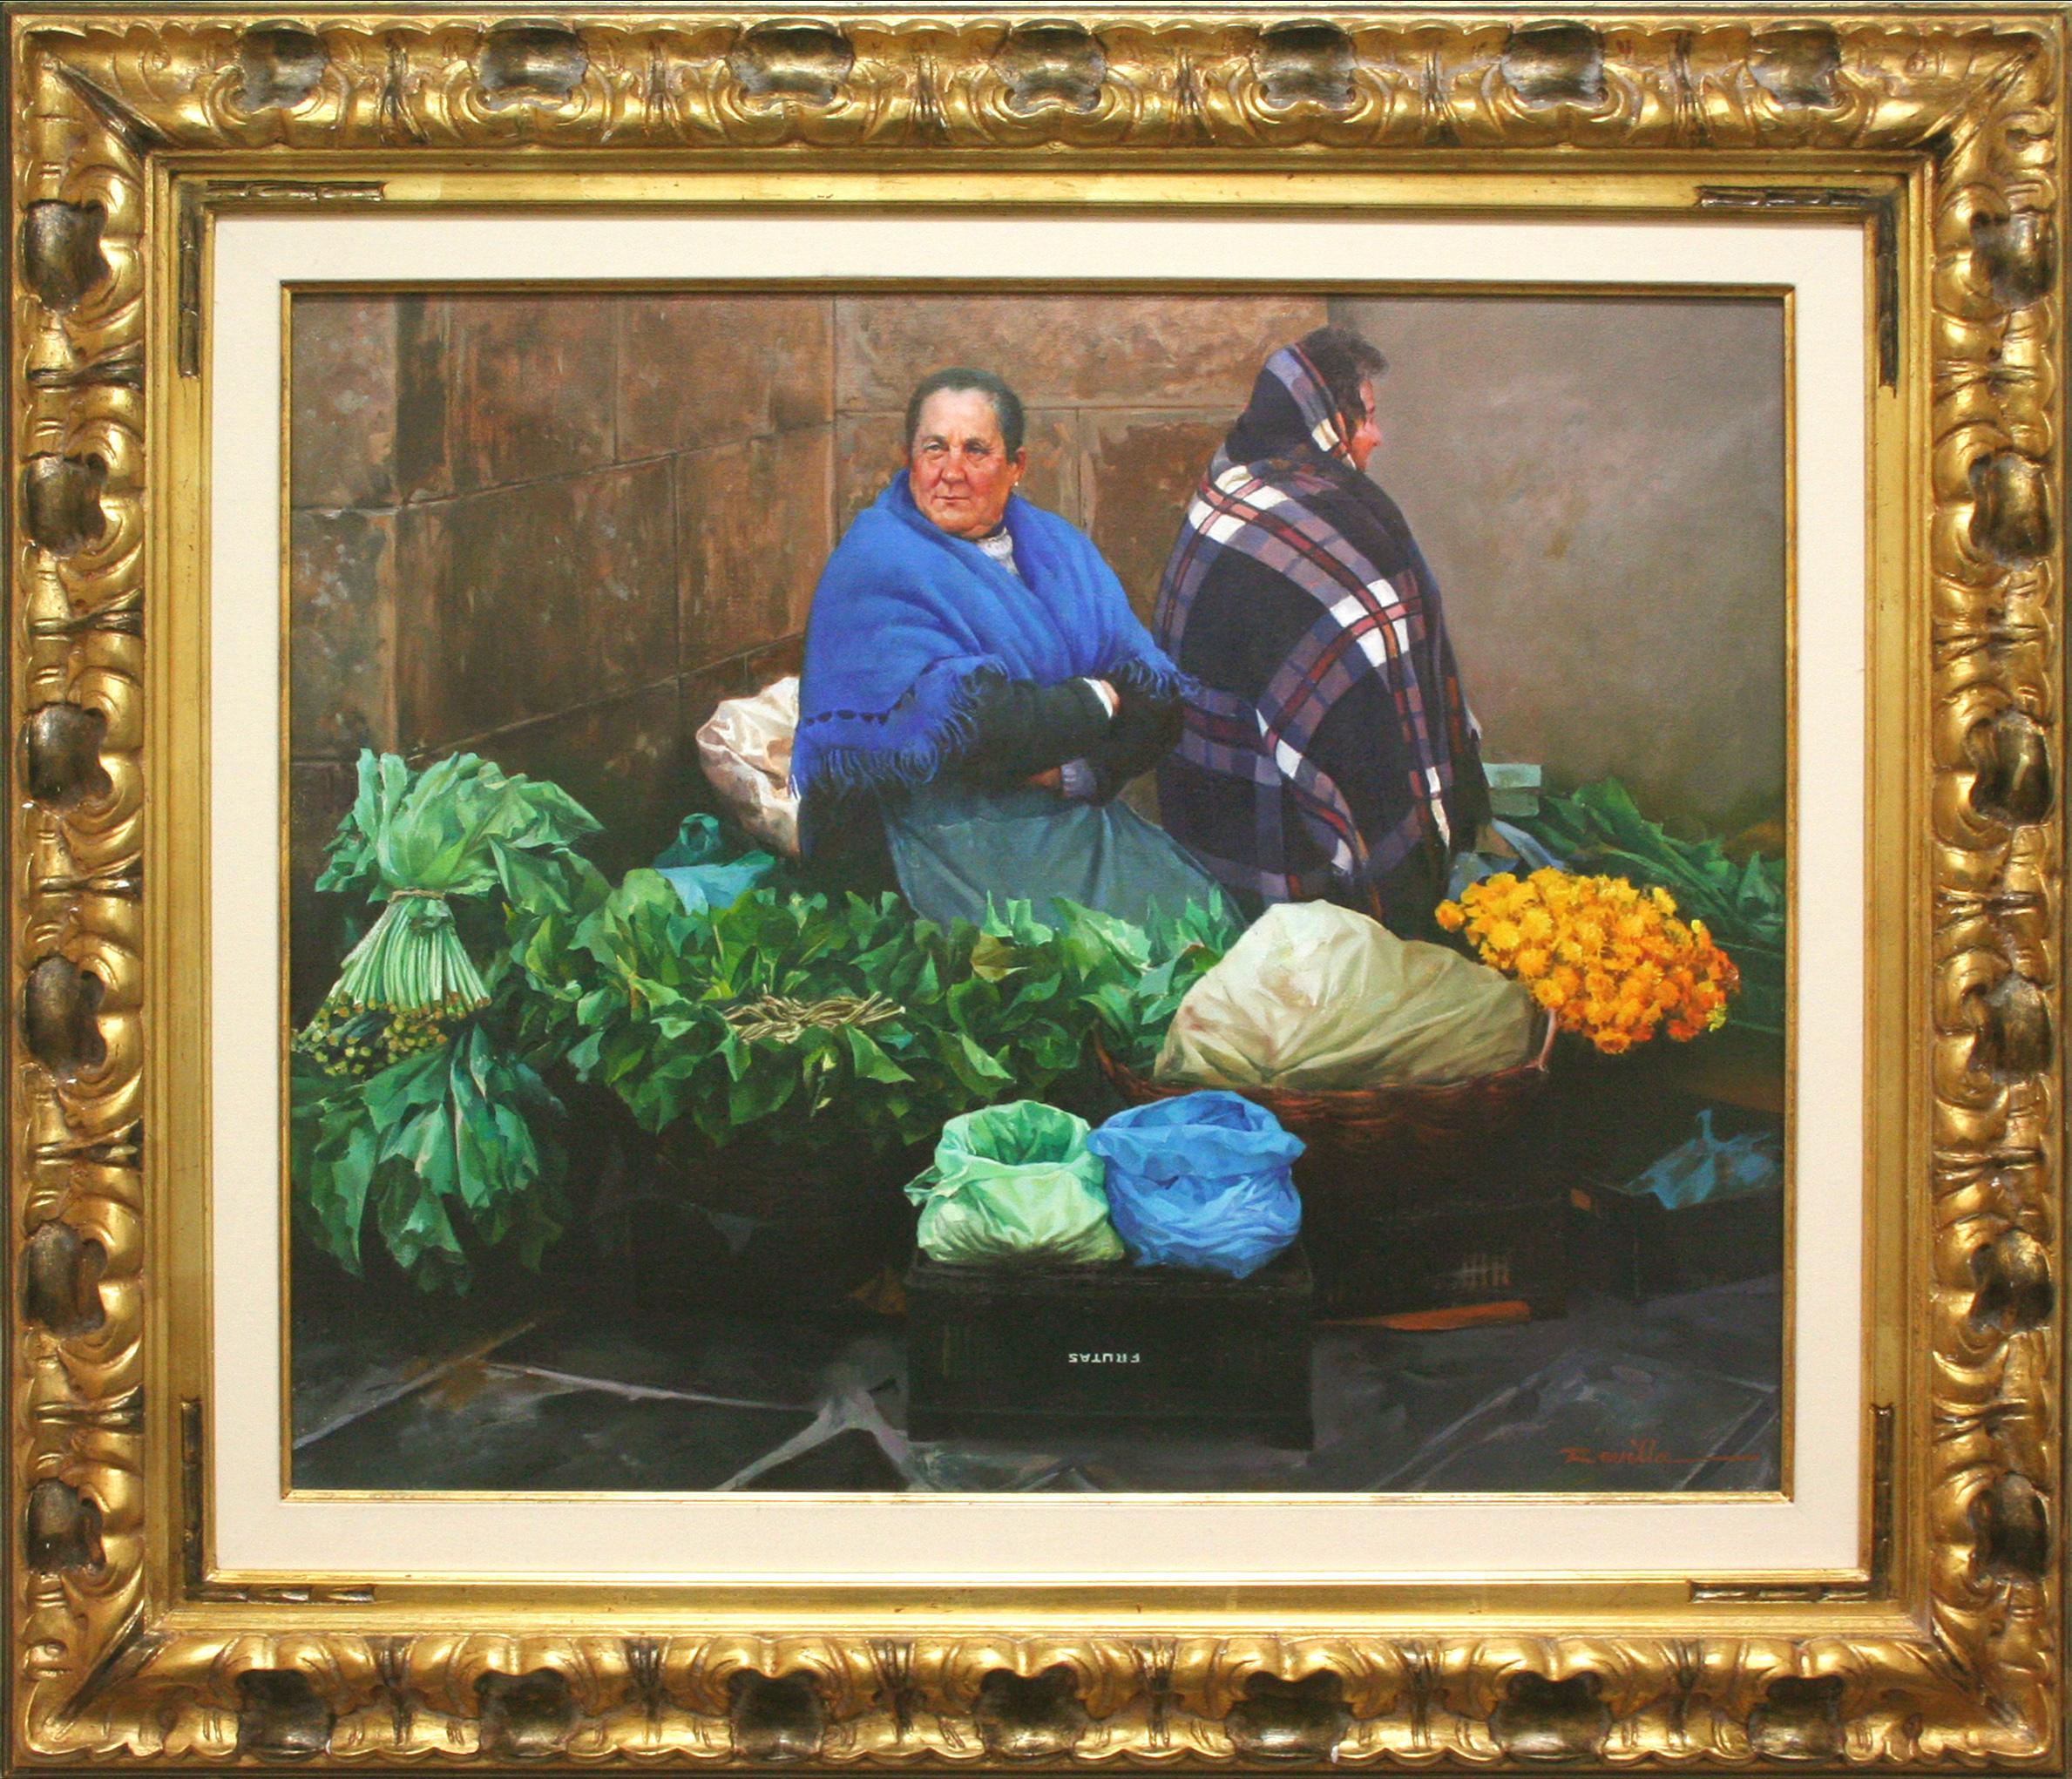 Justo Revilla Figurative Painting - Woman In Market Setting